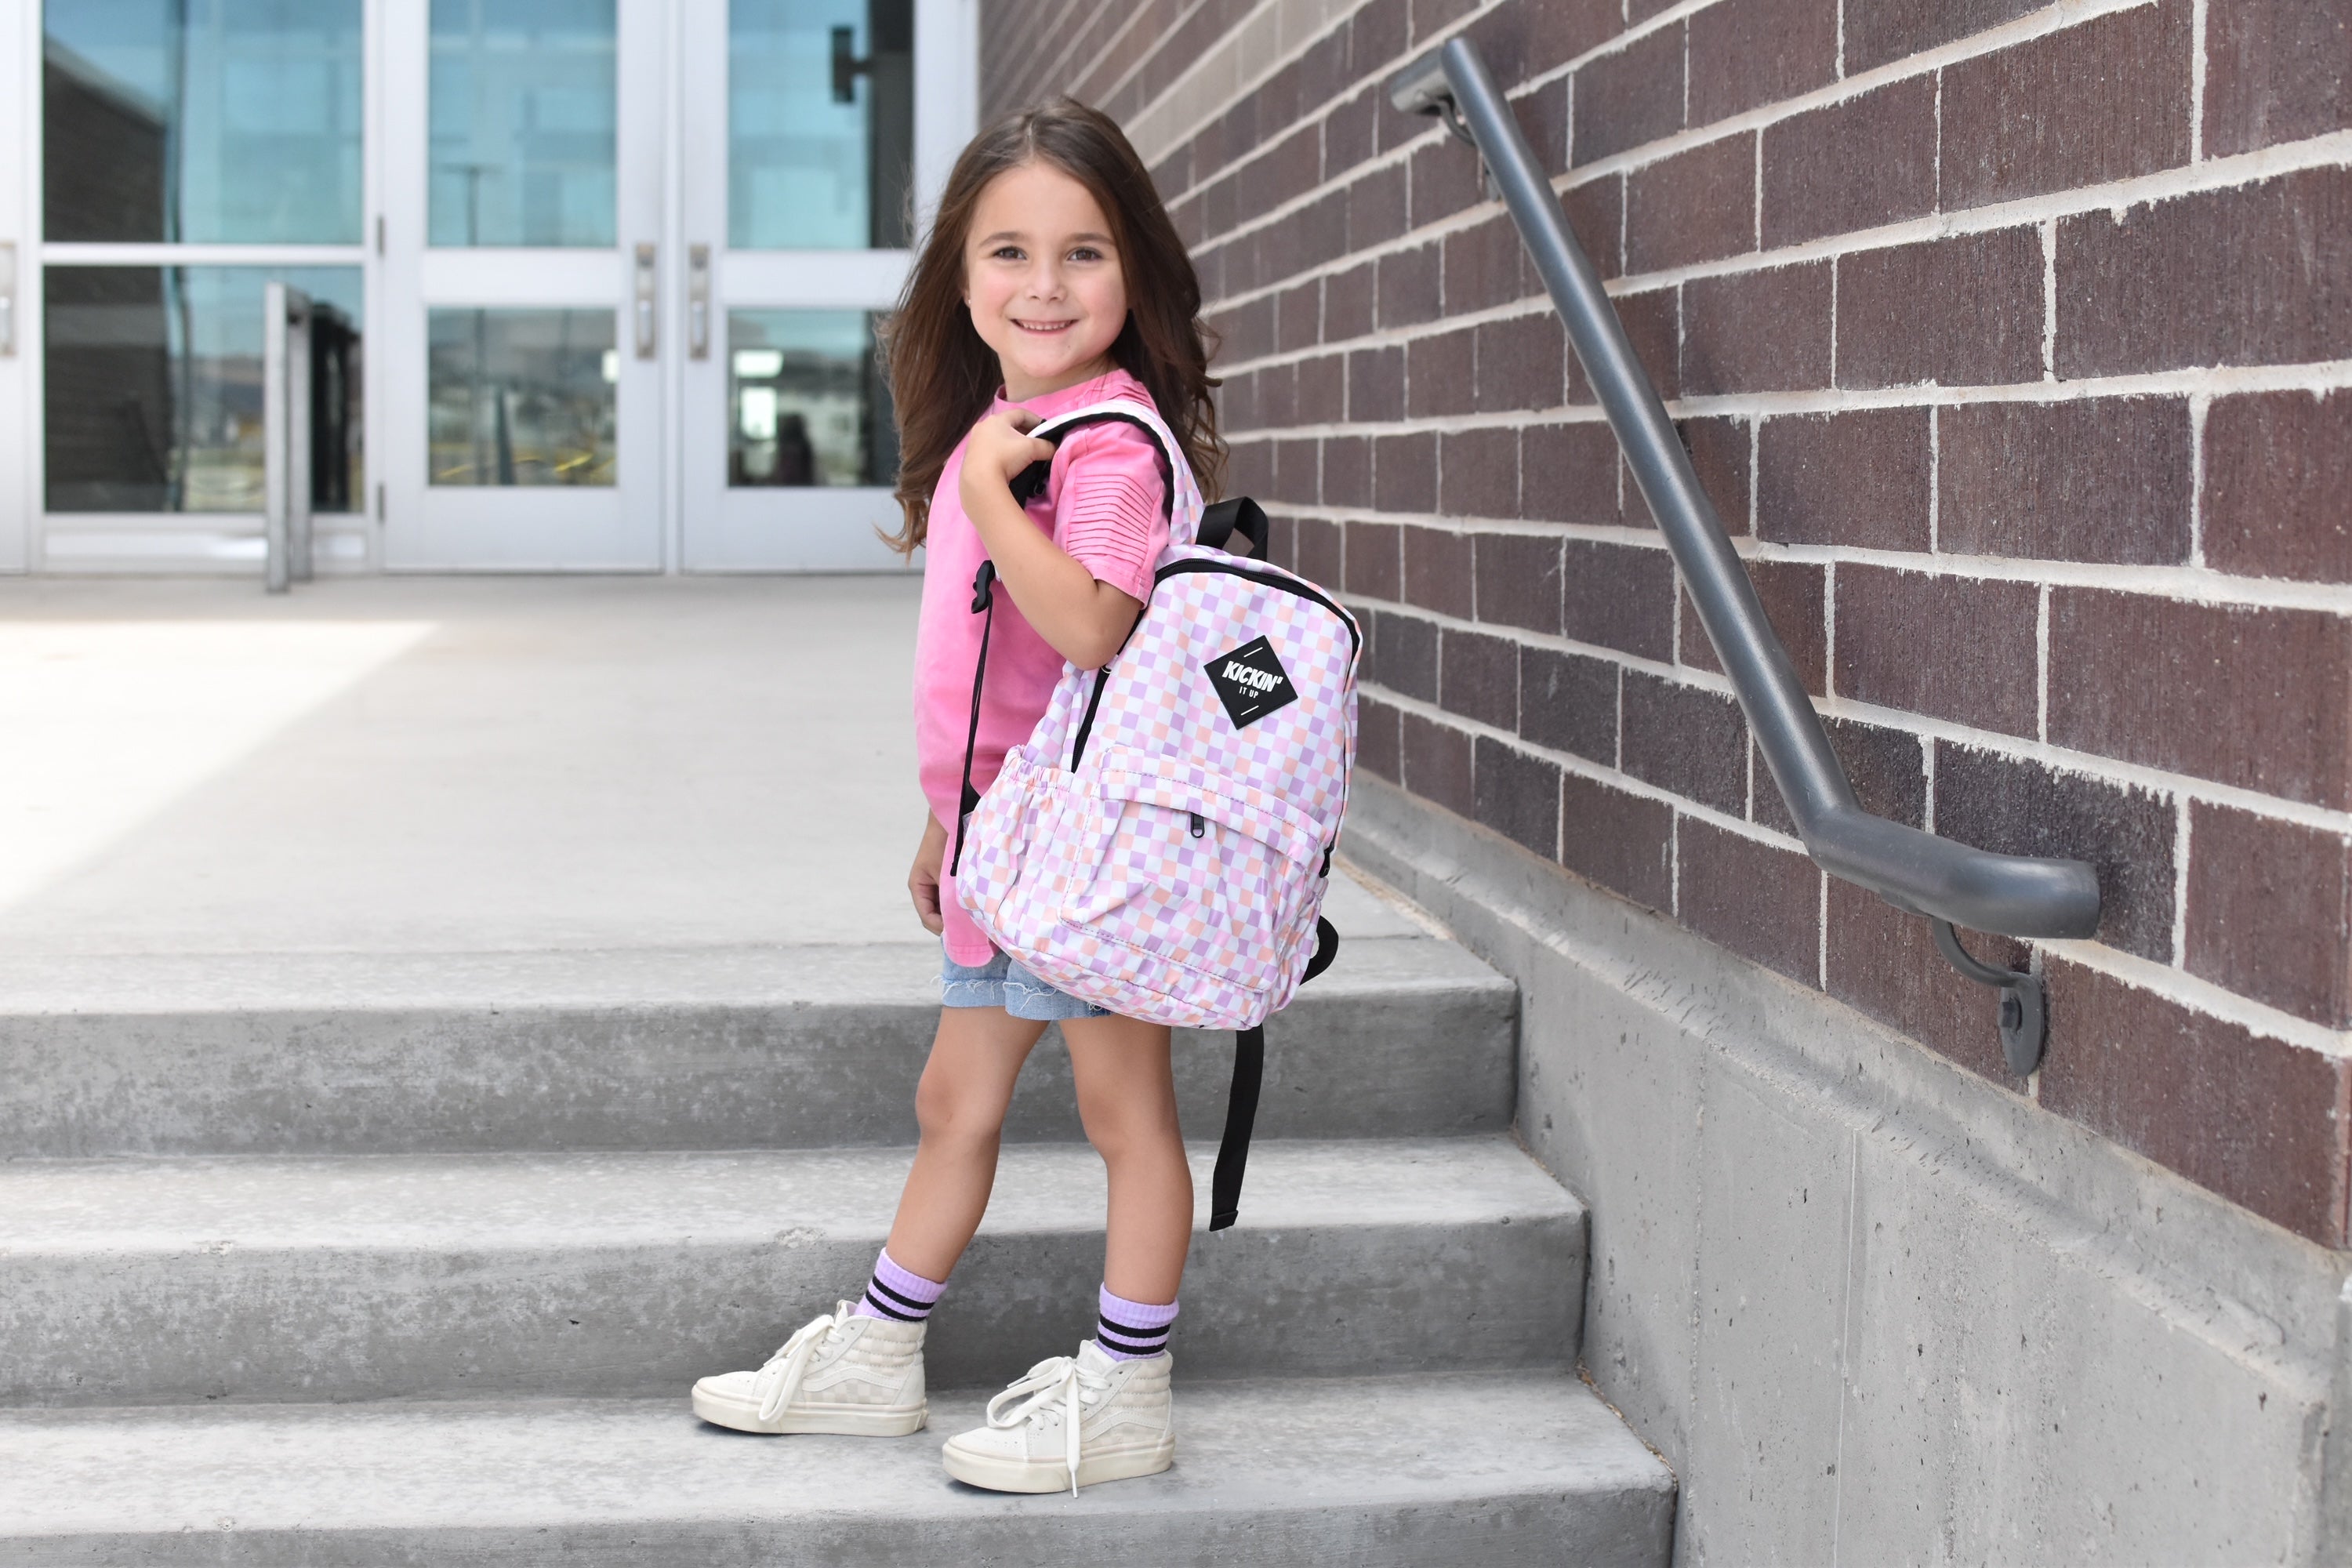 KIU Mid-size Pink Checkered Backpack